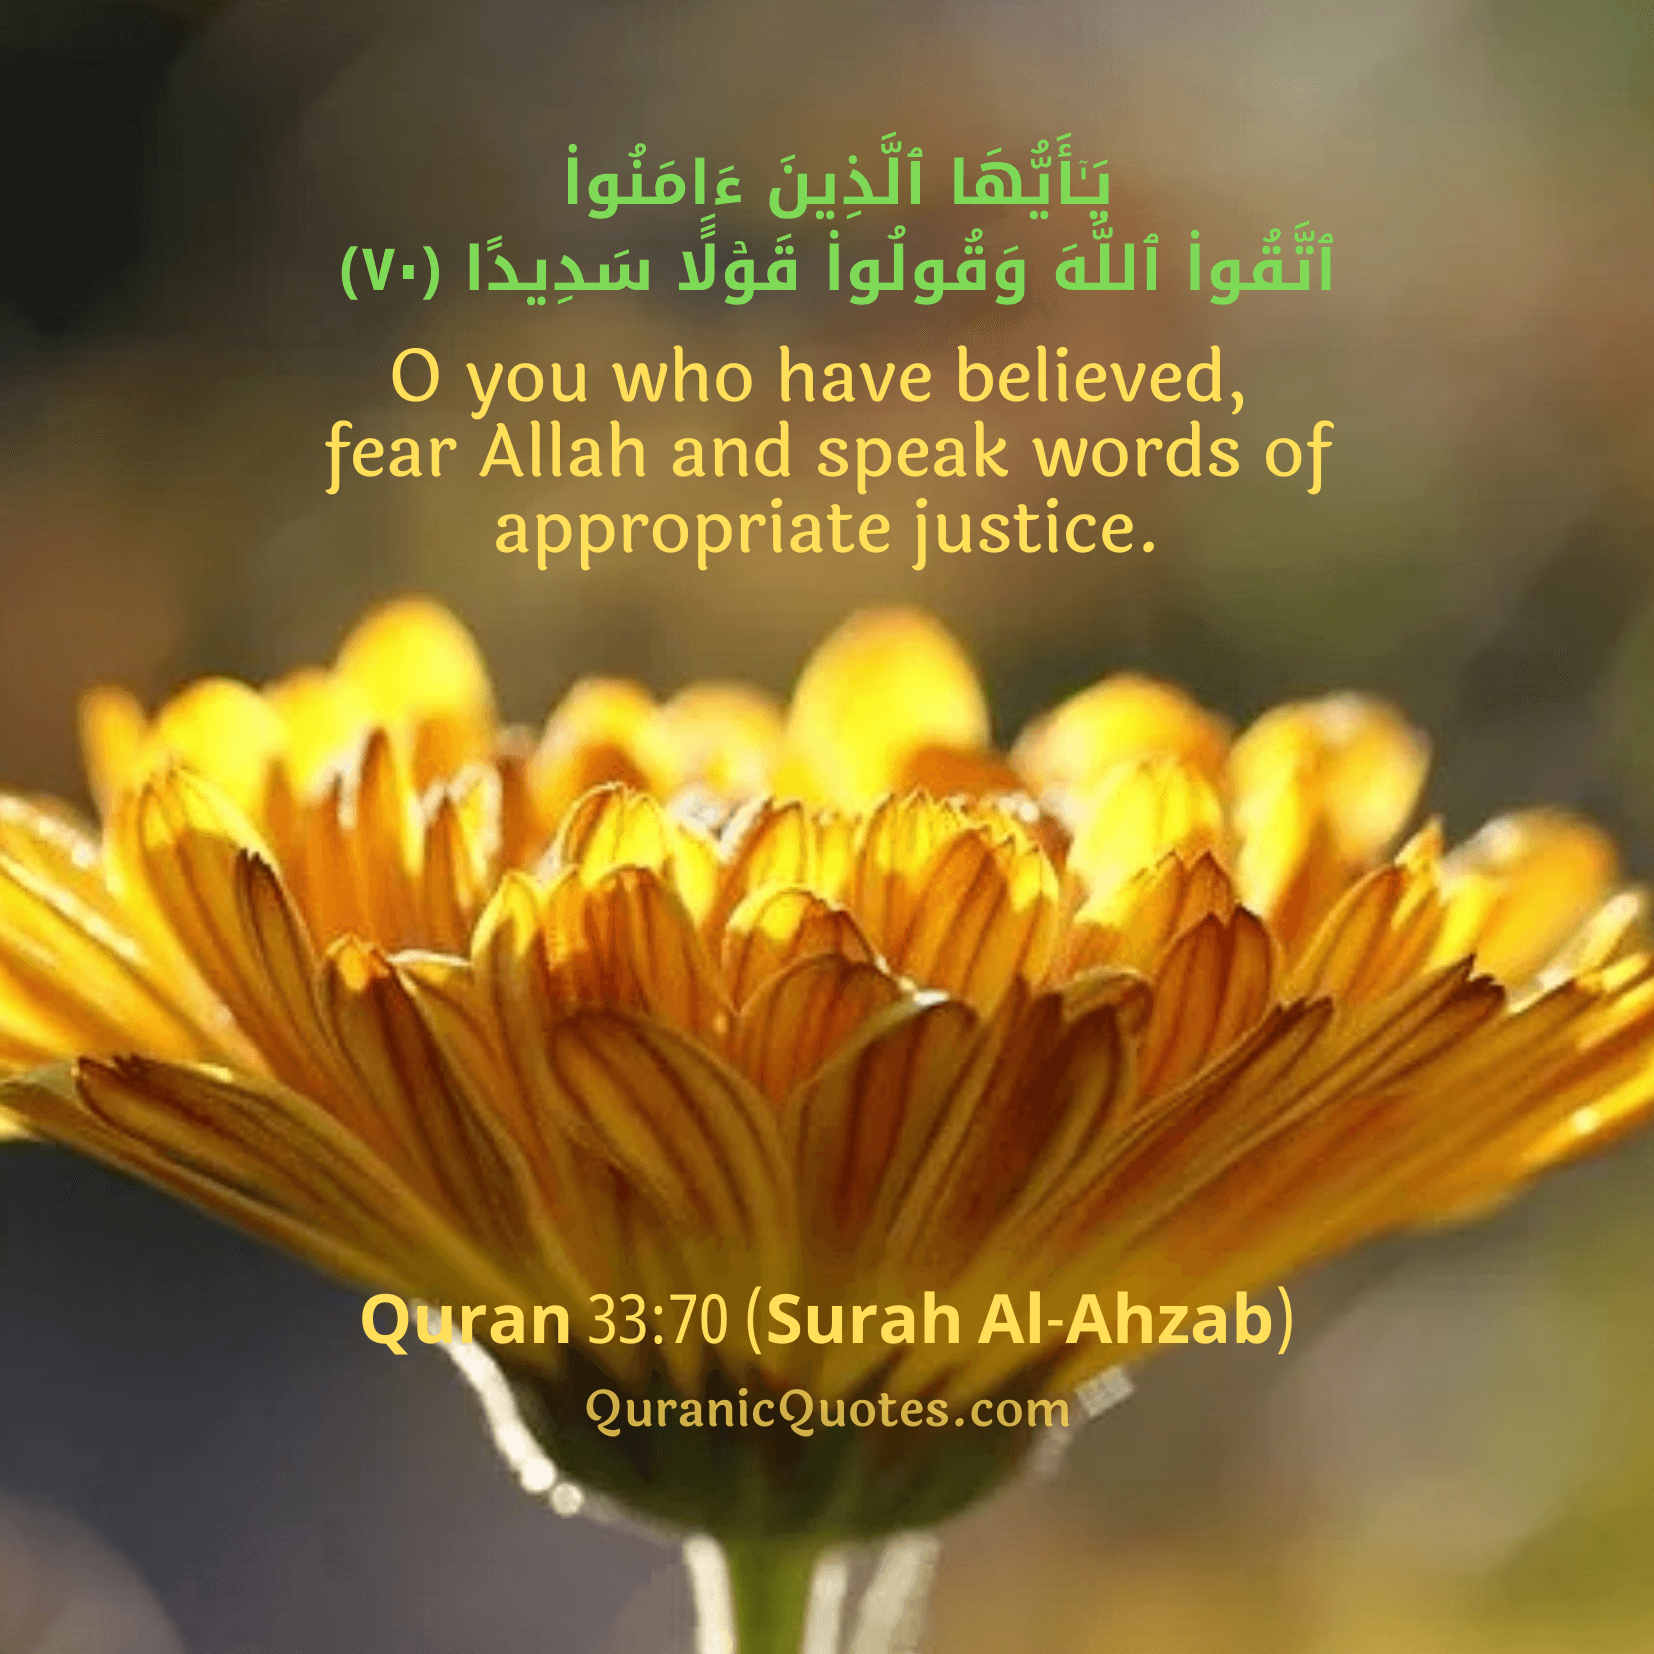 Quranic Quotes in English 406